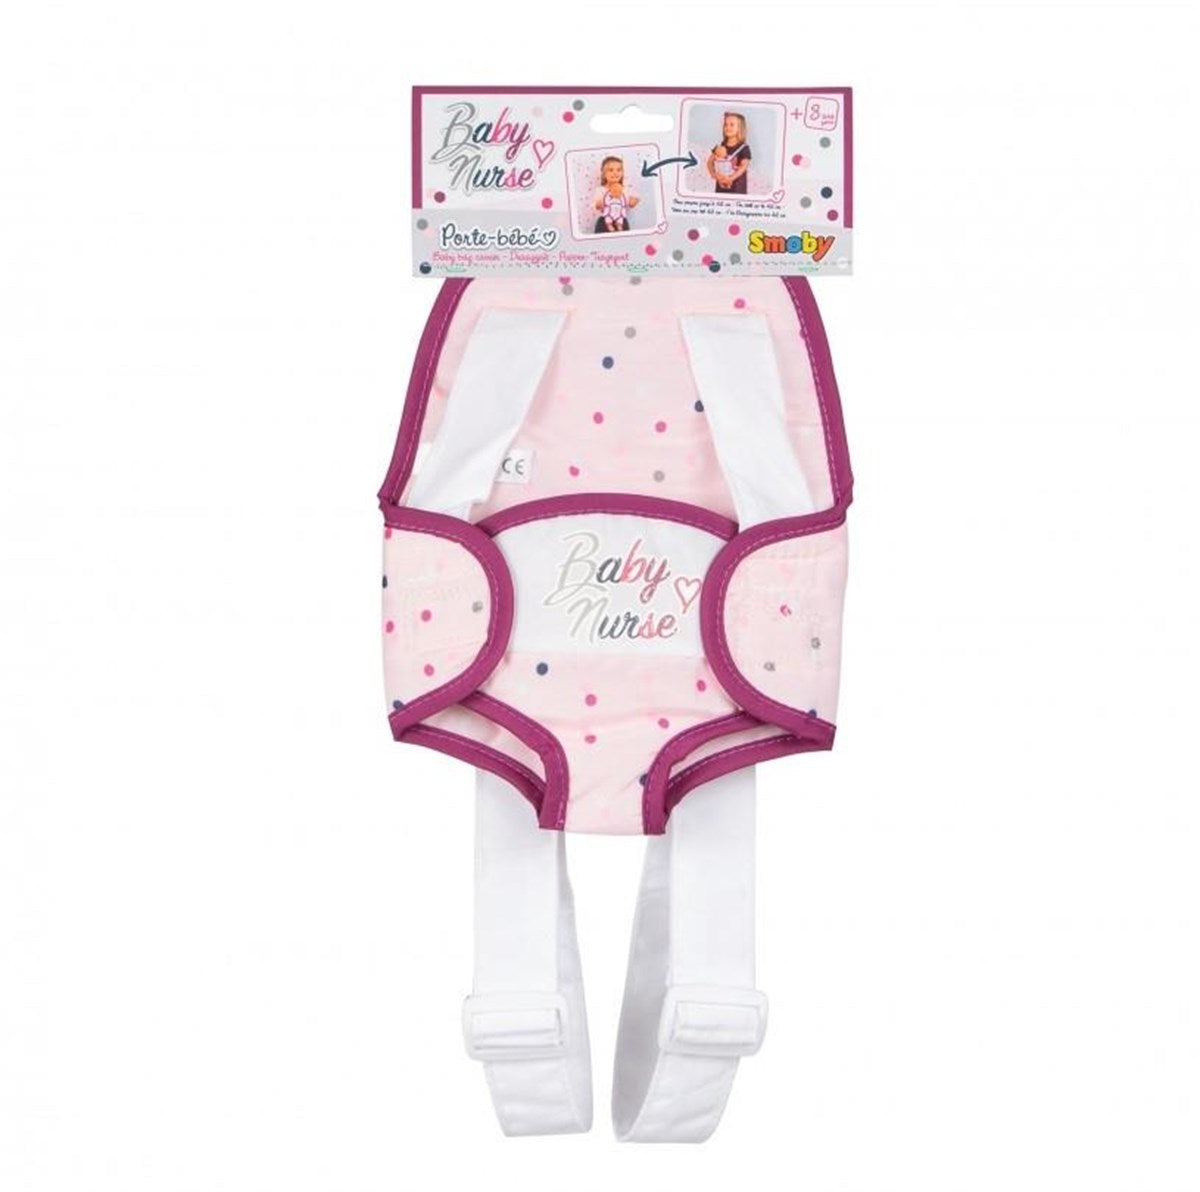 Smoby Baby Nurse Oyuncak Ana Kucağı 220361 | Toysall